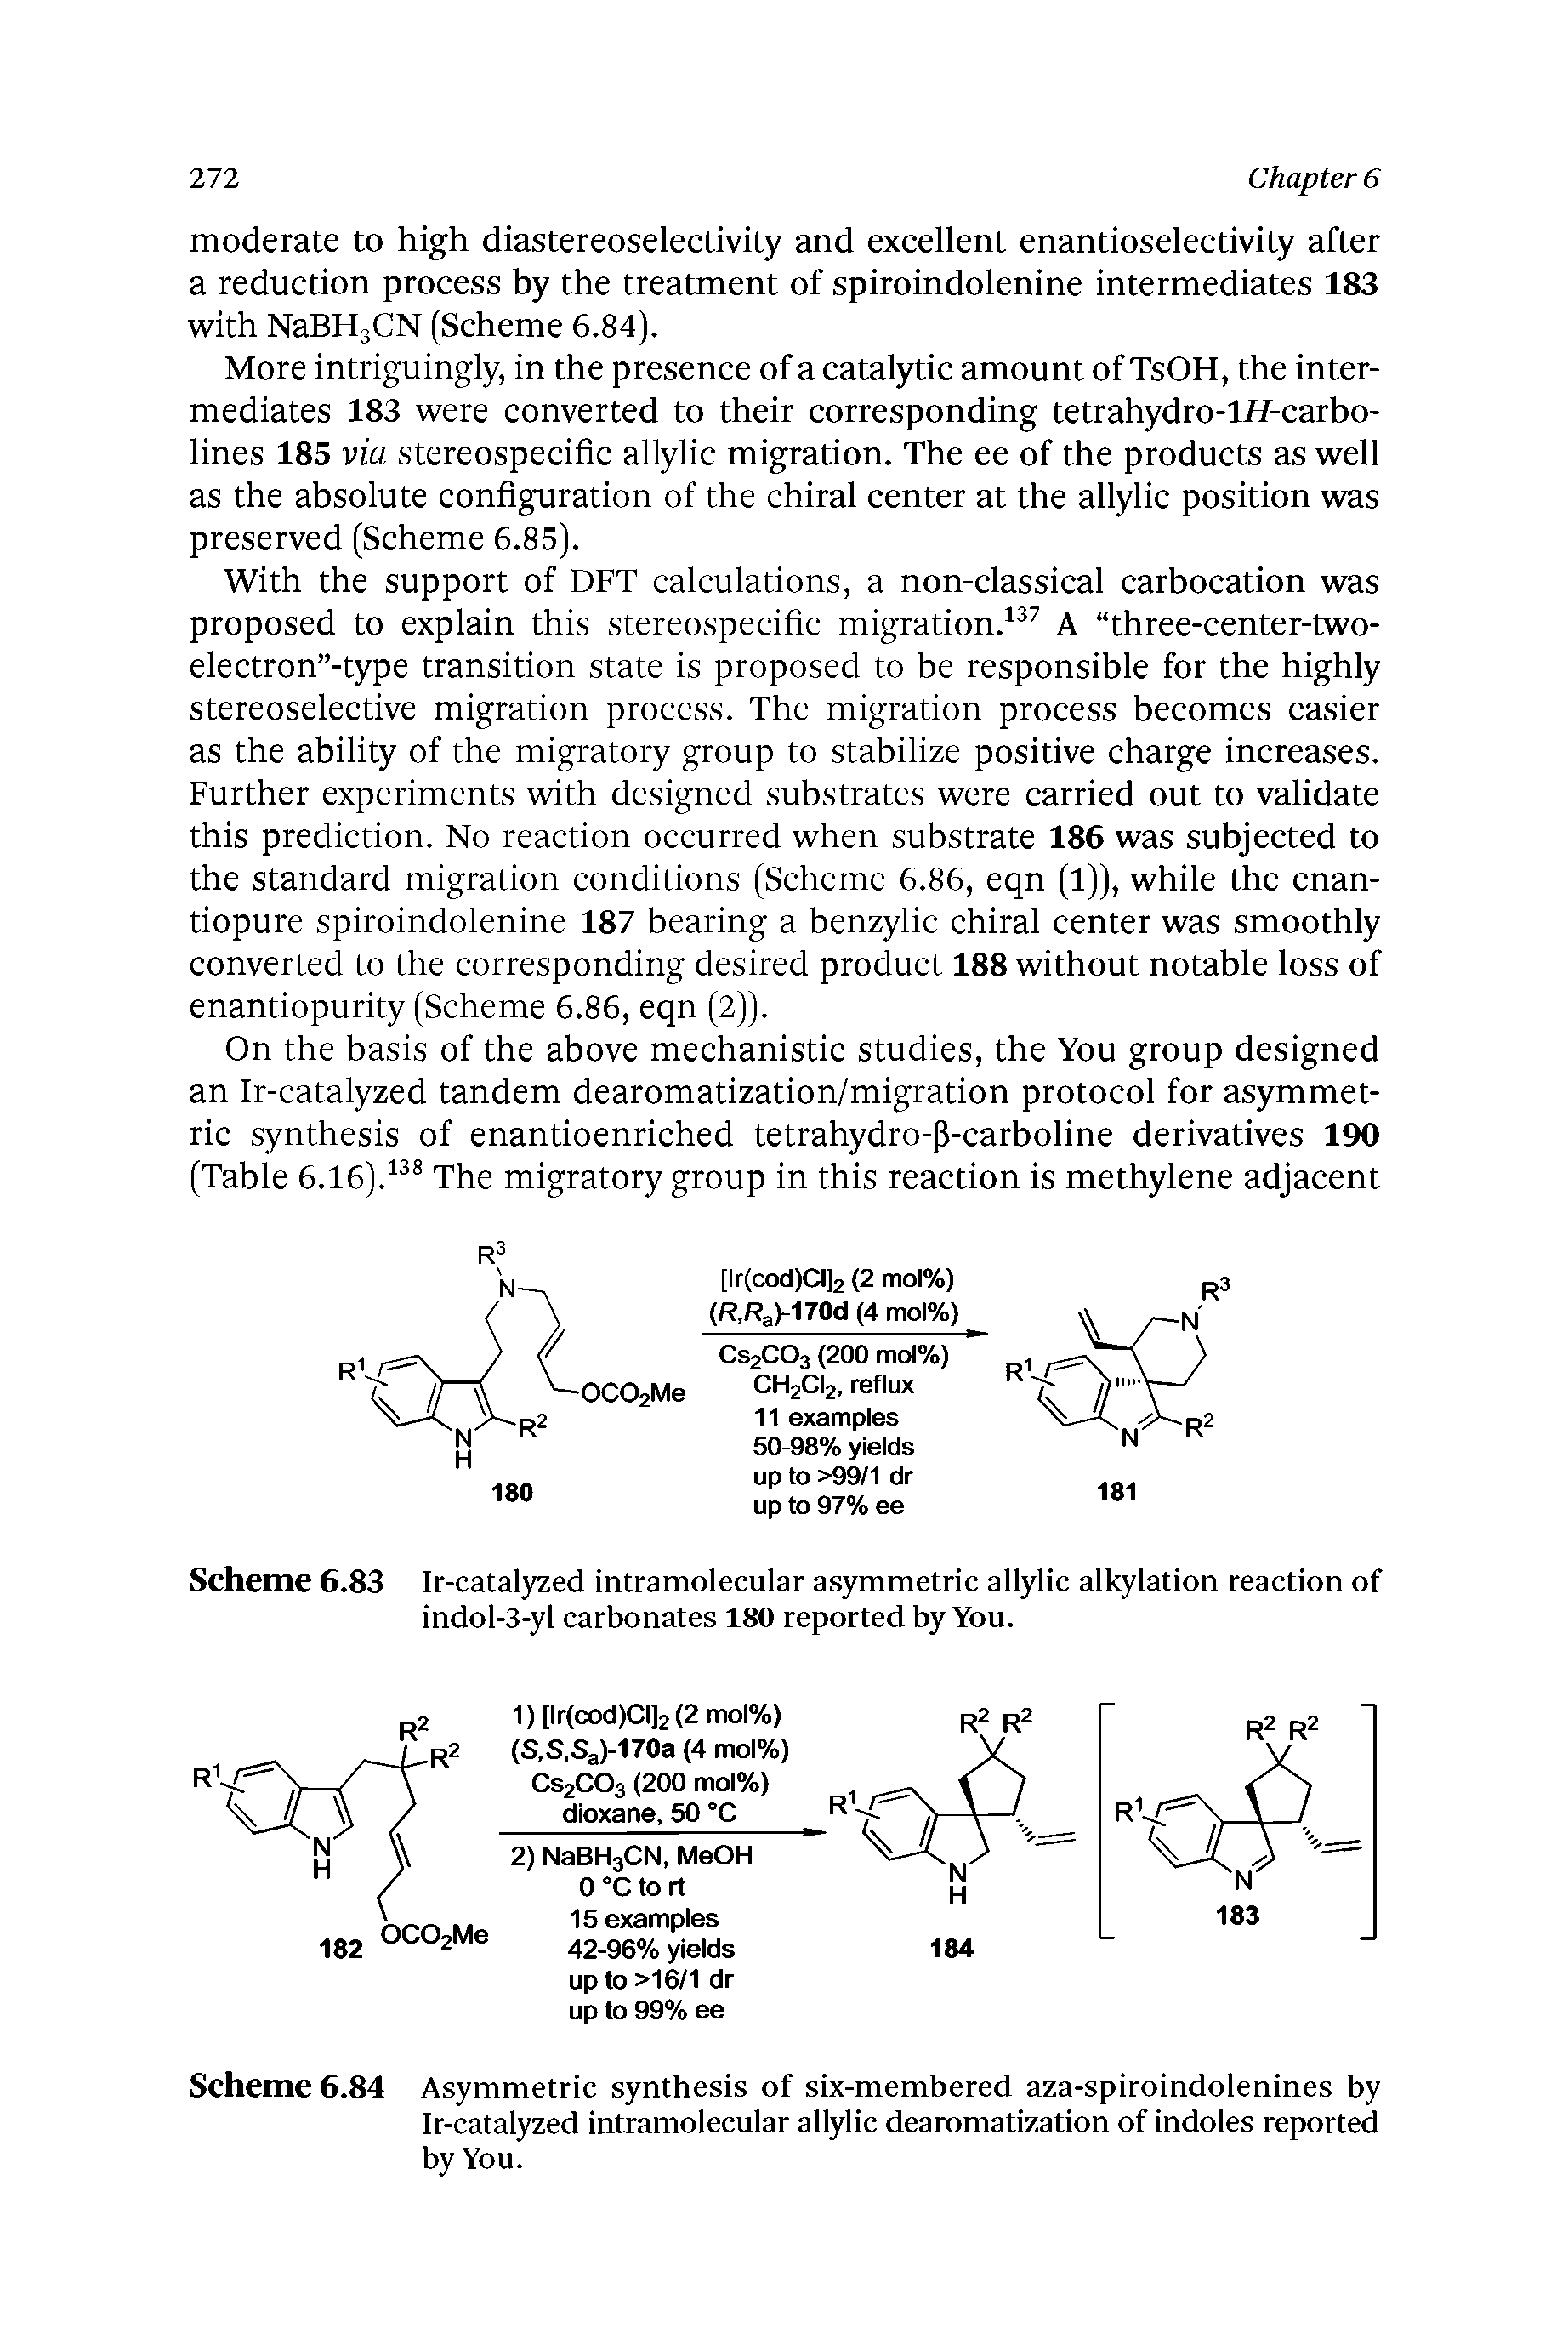 Scheme 6.83 Ir-catalyzed intramolecular asymmetric allylic alkylation reaction of indol-3-yl carbonates 180 reported by You.